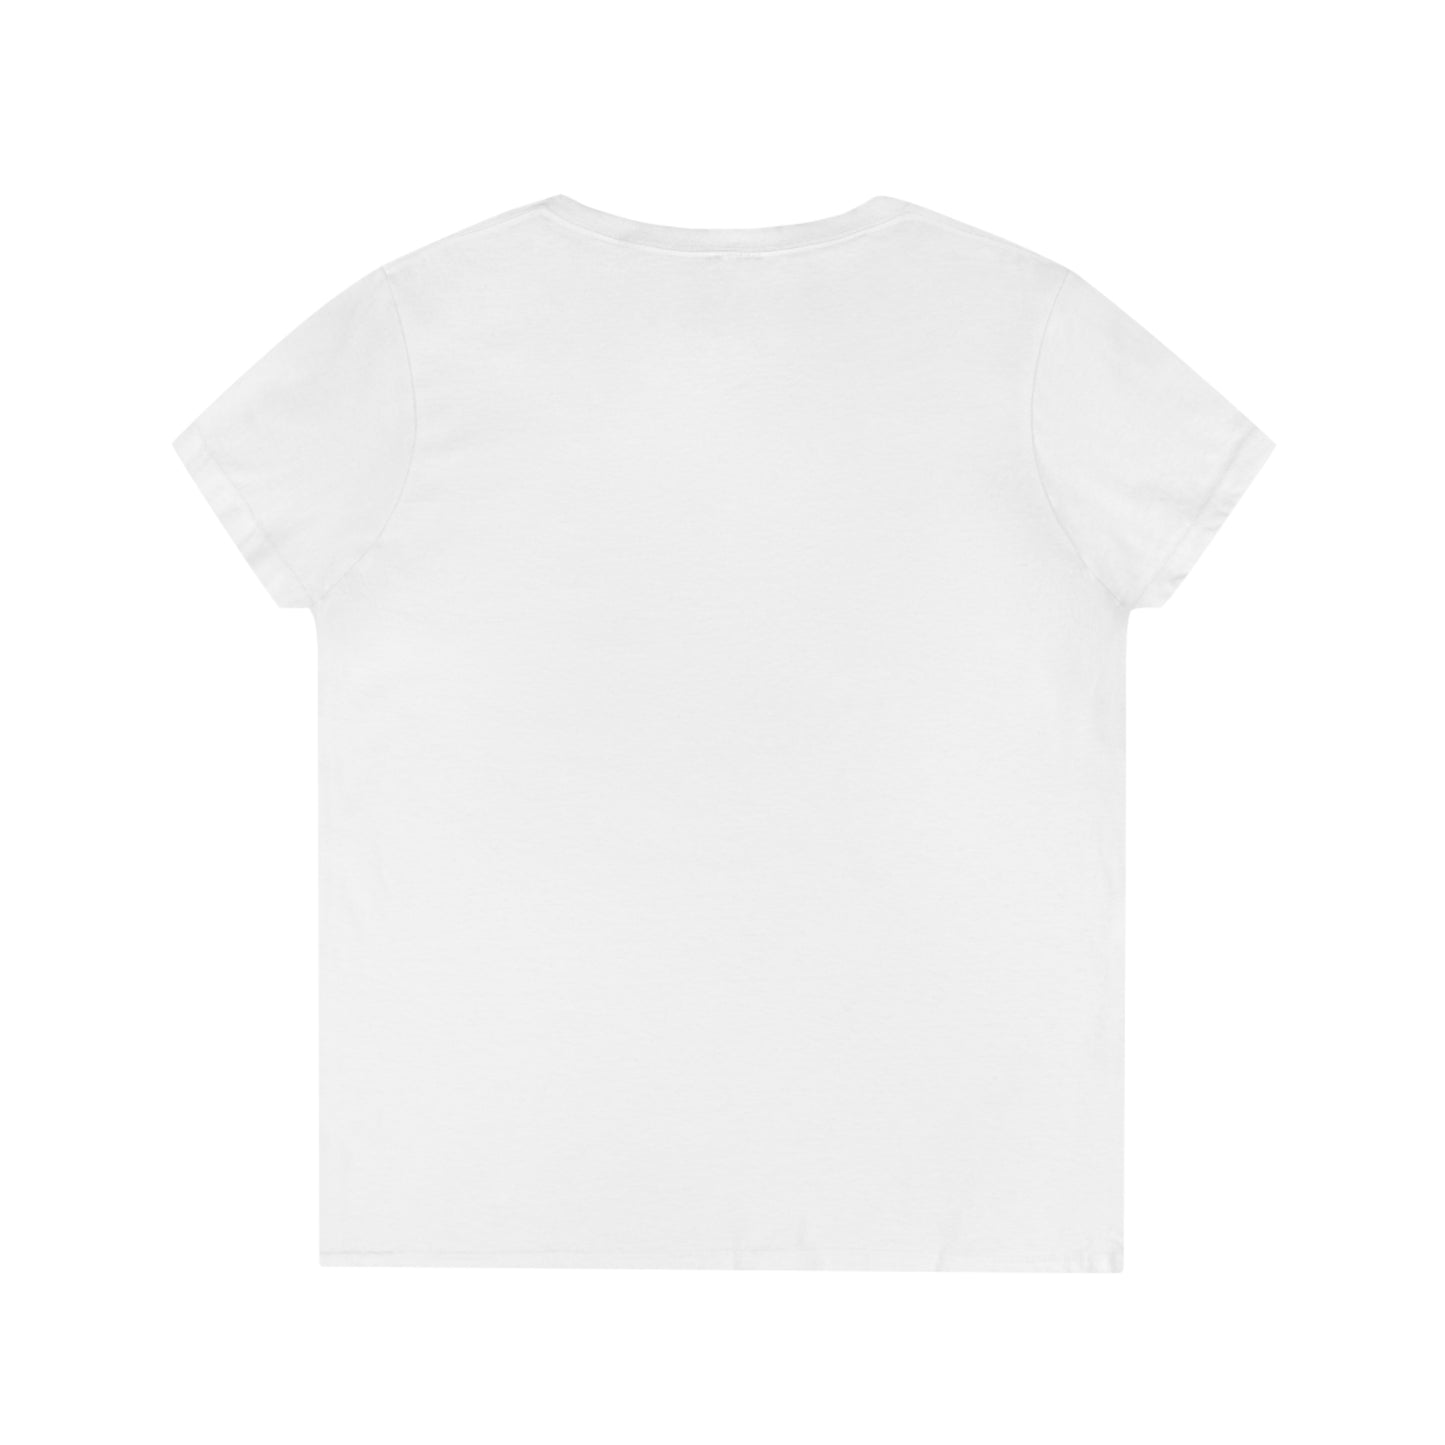 MIAMI ANITA Ladies' V-Neck T-Shirt